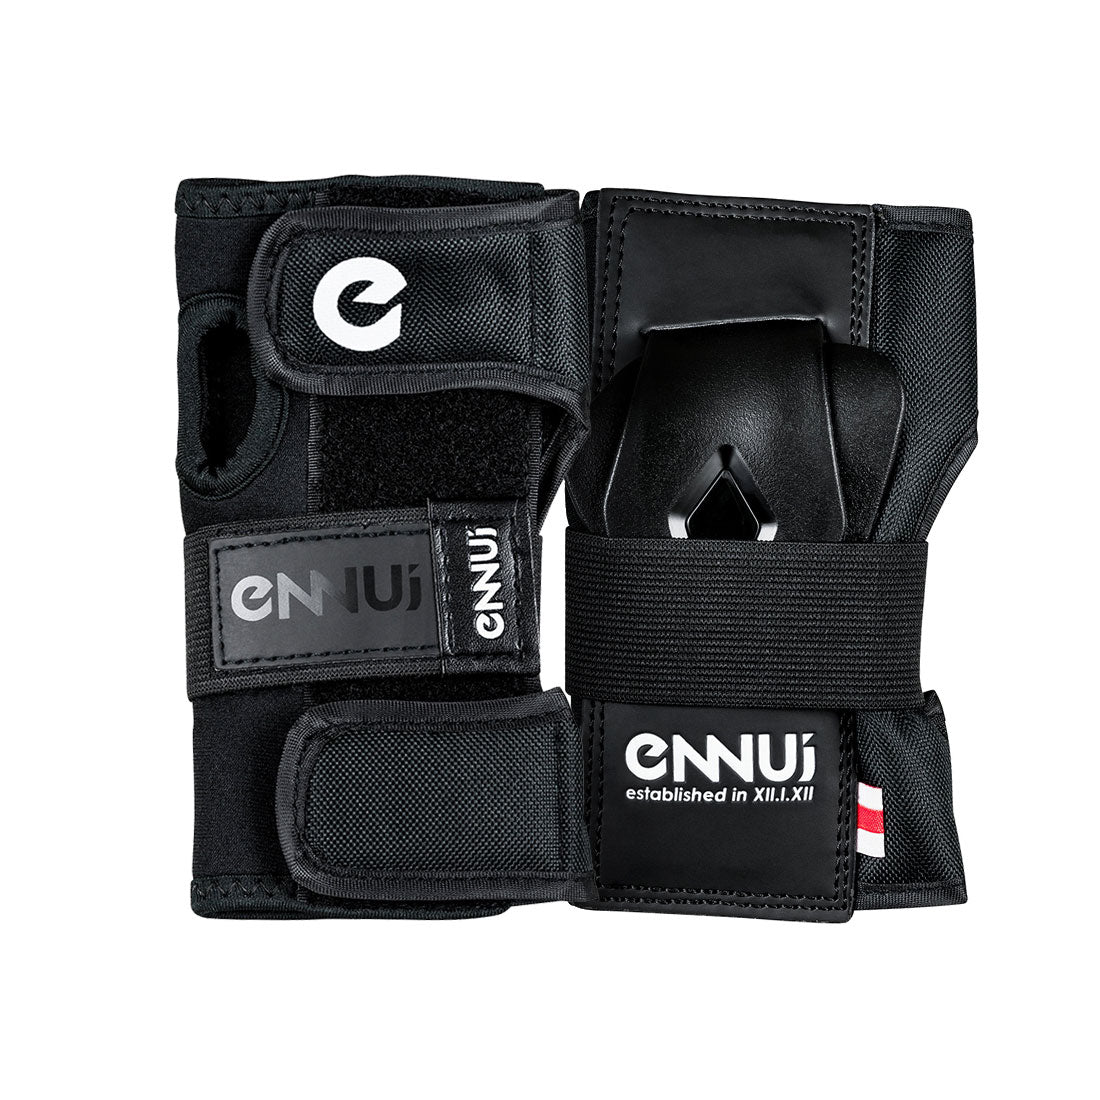 Ennui Street Wrist Guards Protective Gear